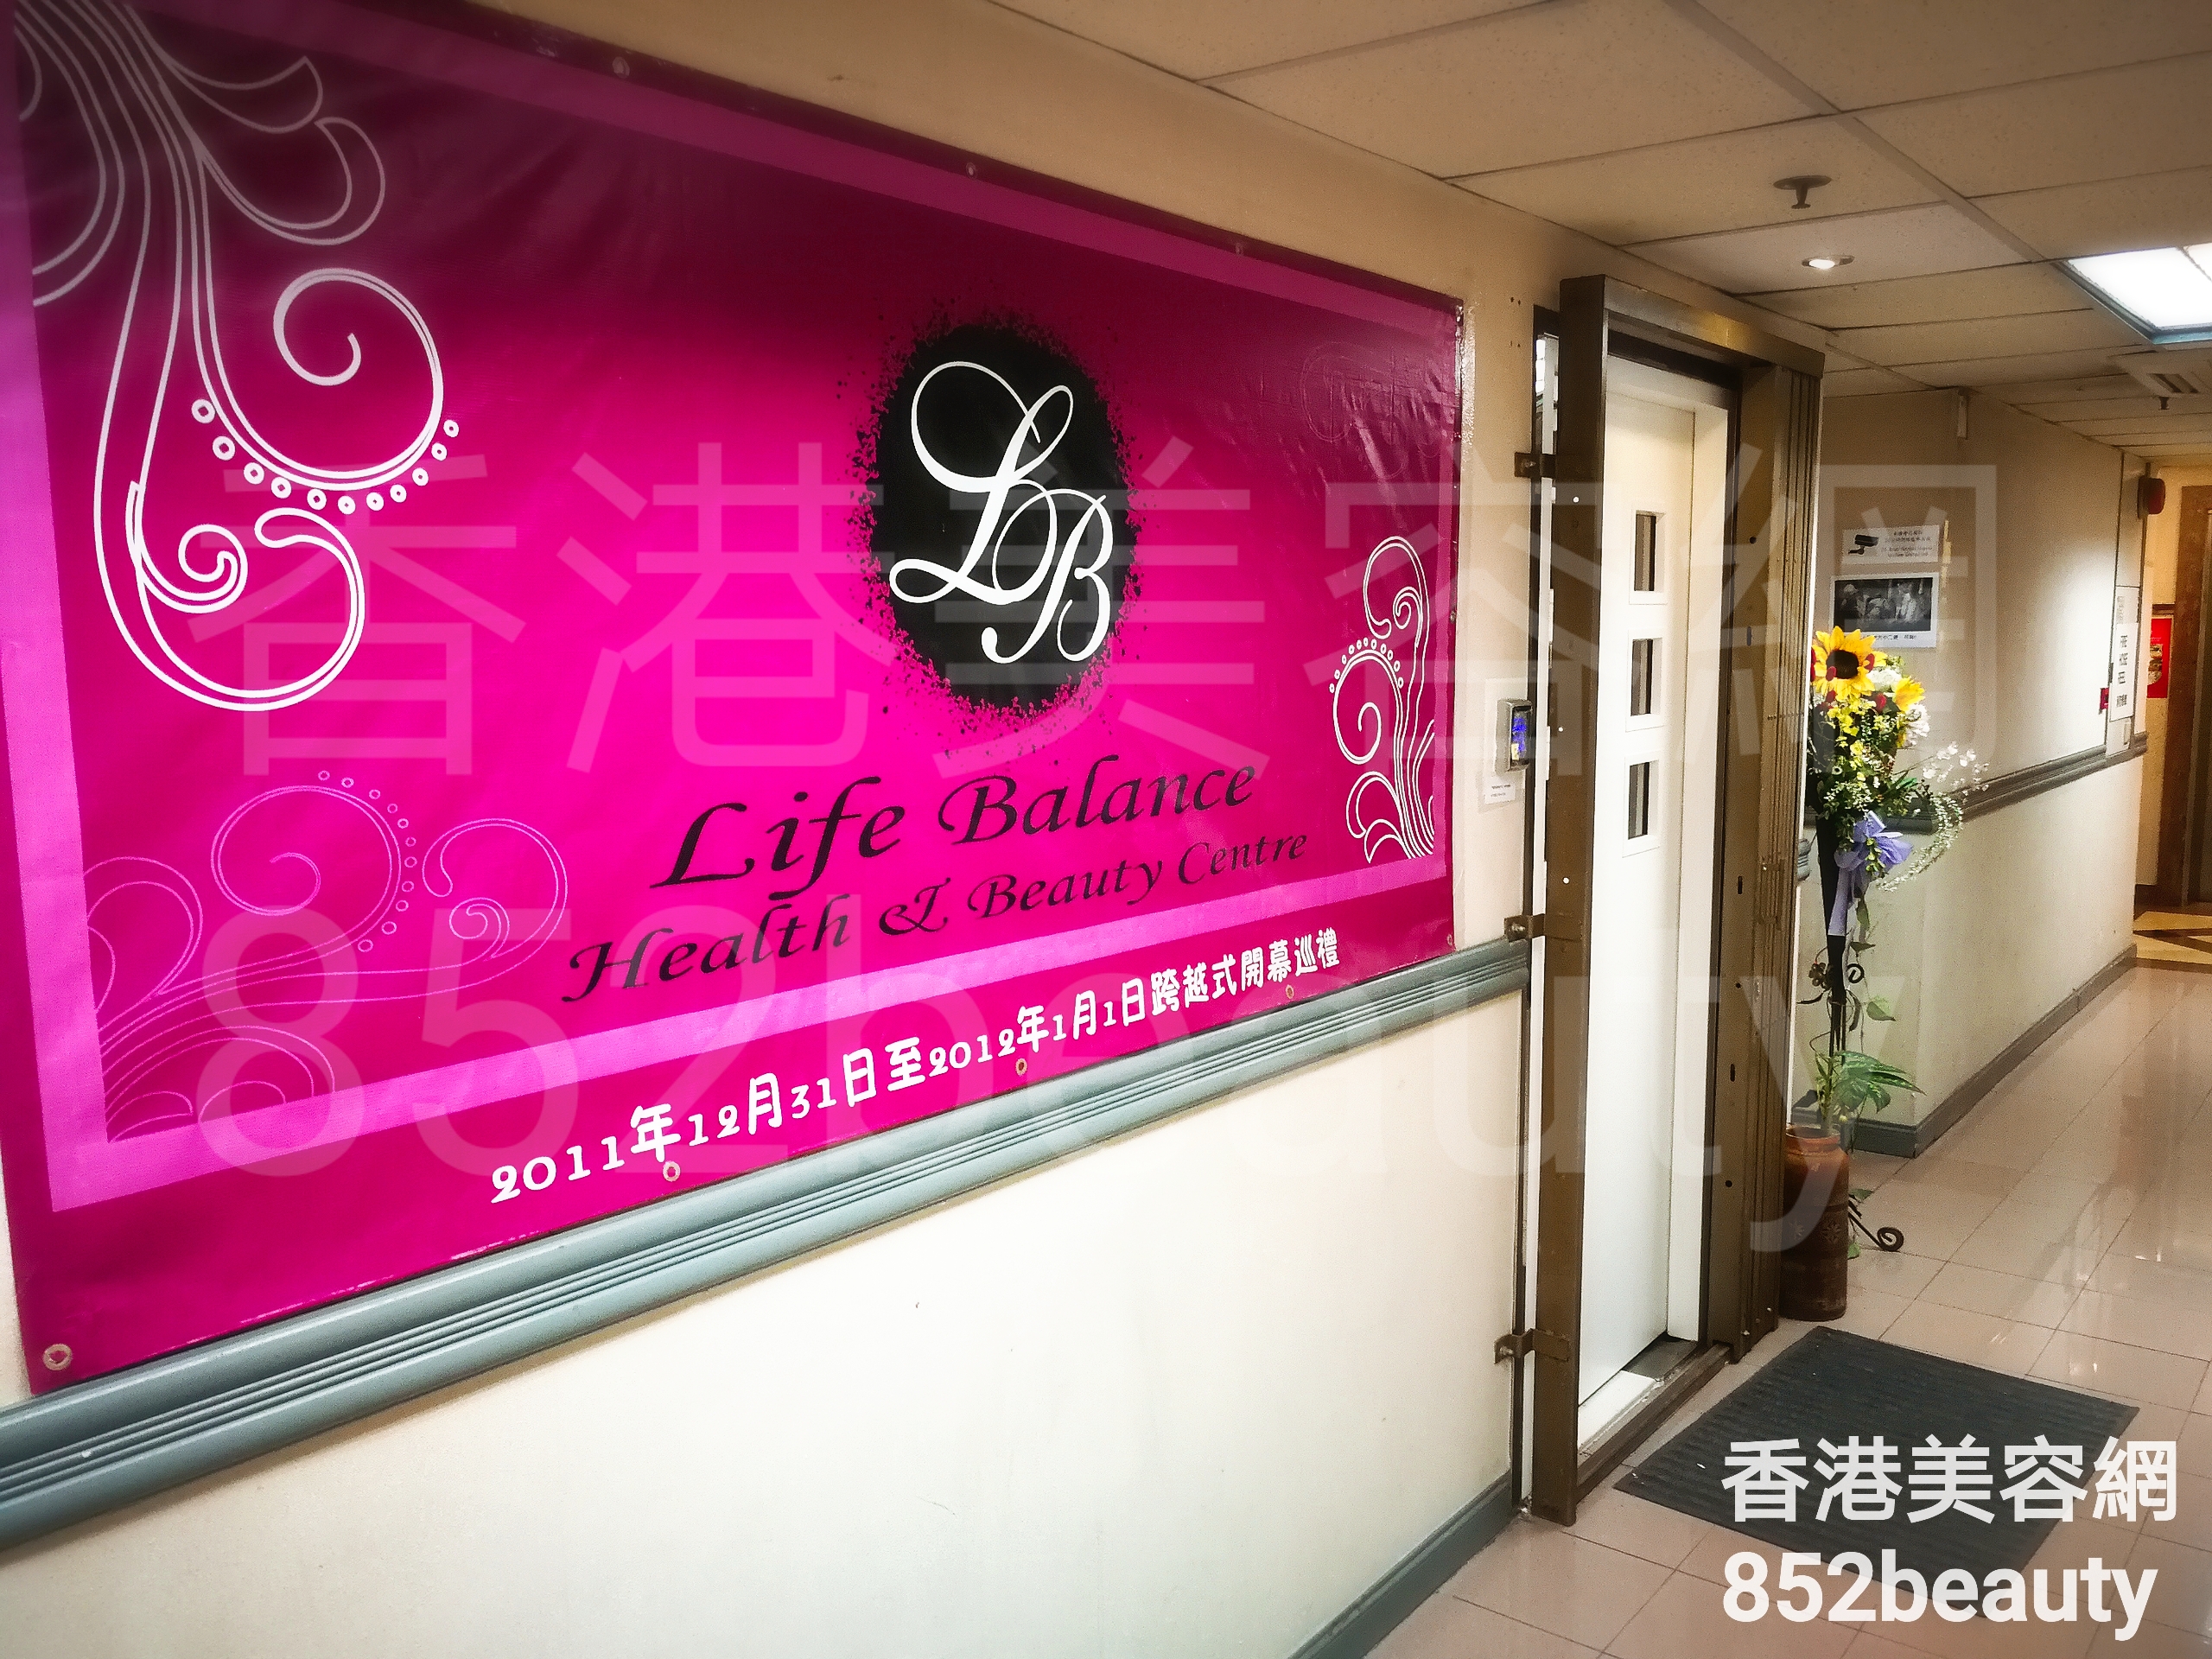 香港美容網 Hong Kong Beauty Salon 美容院 / 美容師: Life Balance Health & Beauty Centre